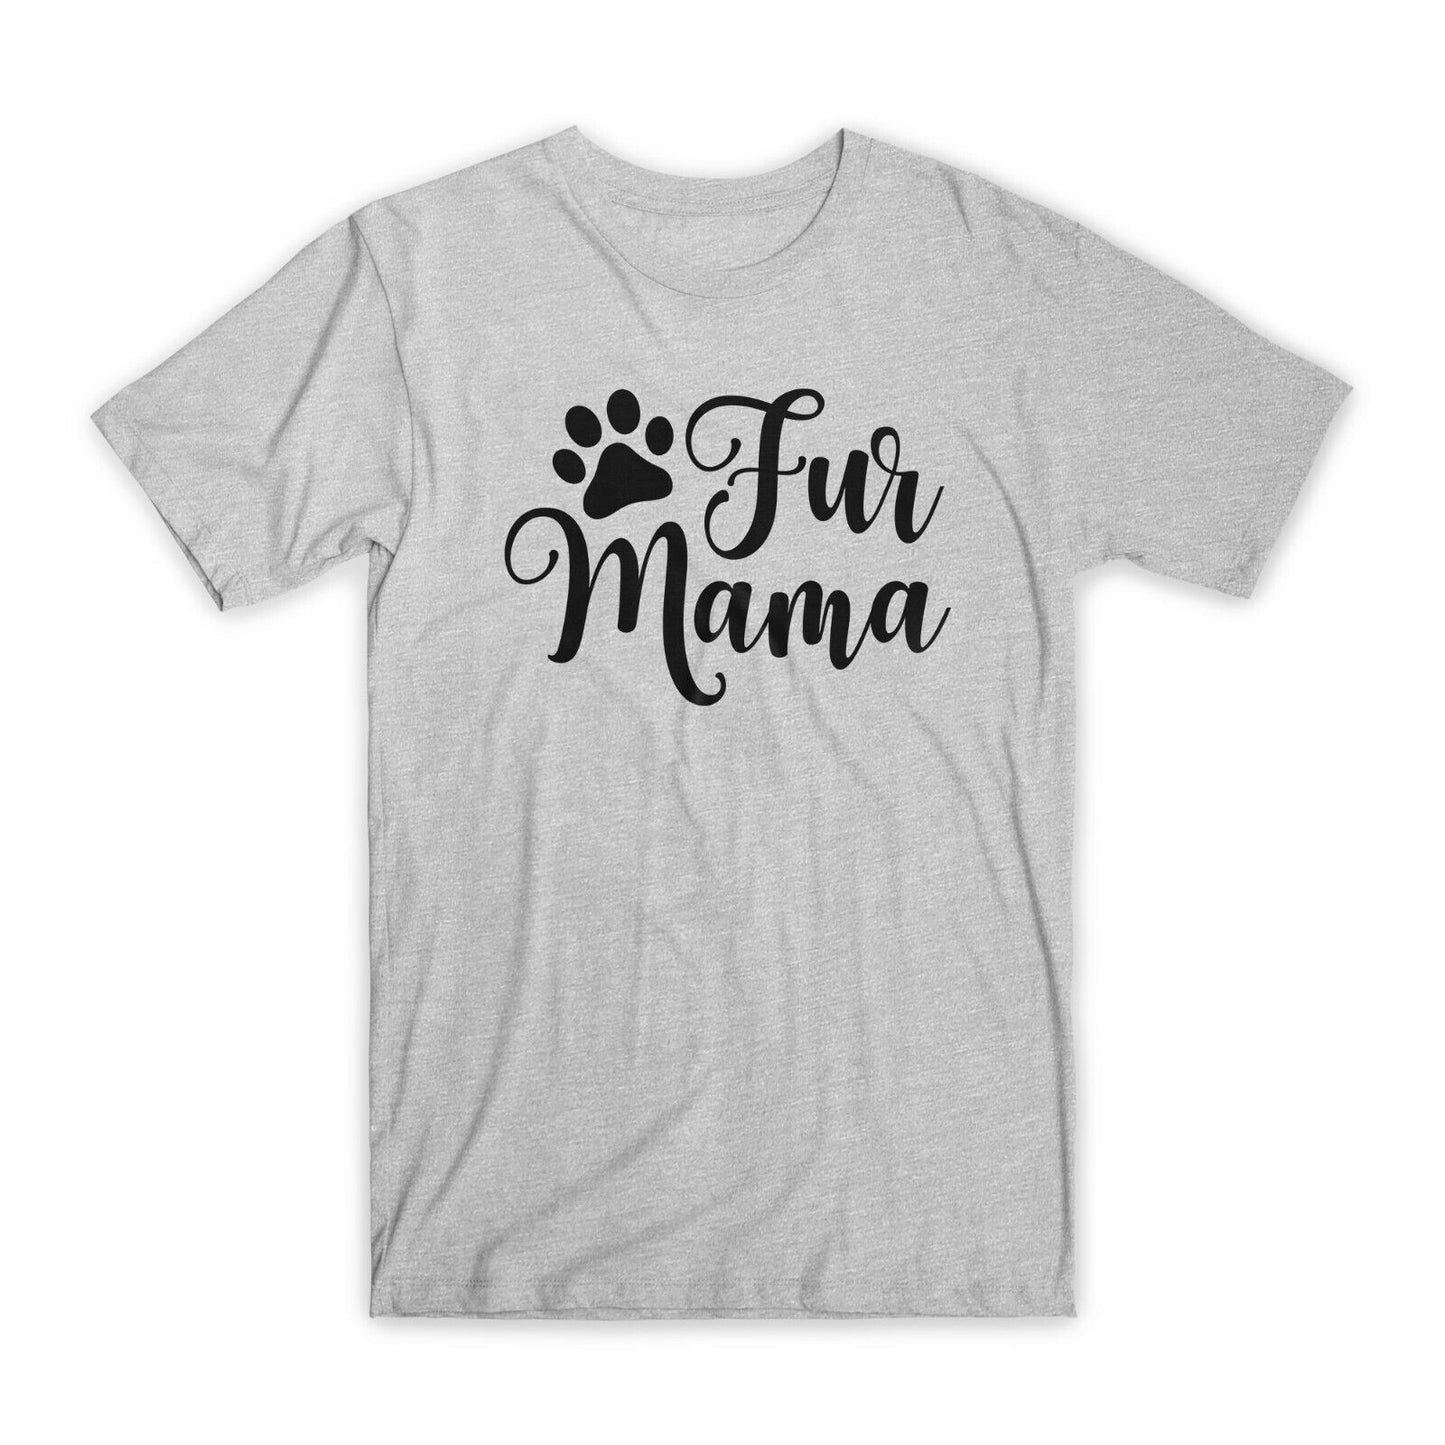 Fur Mama Print T-Shirt Premium Soft Cotton Crew Neck Funny Tees Novelty Gift NEW